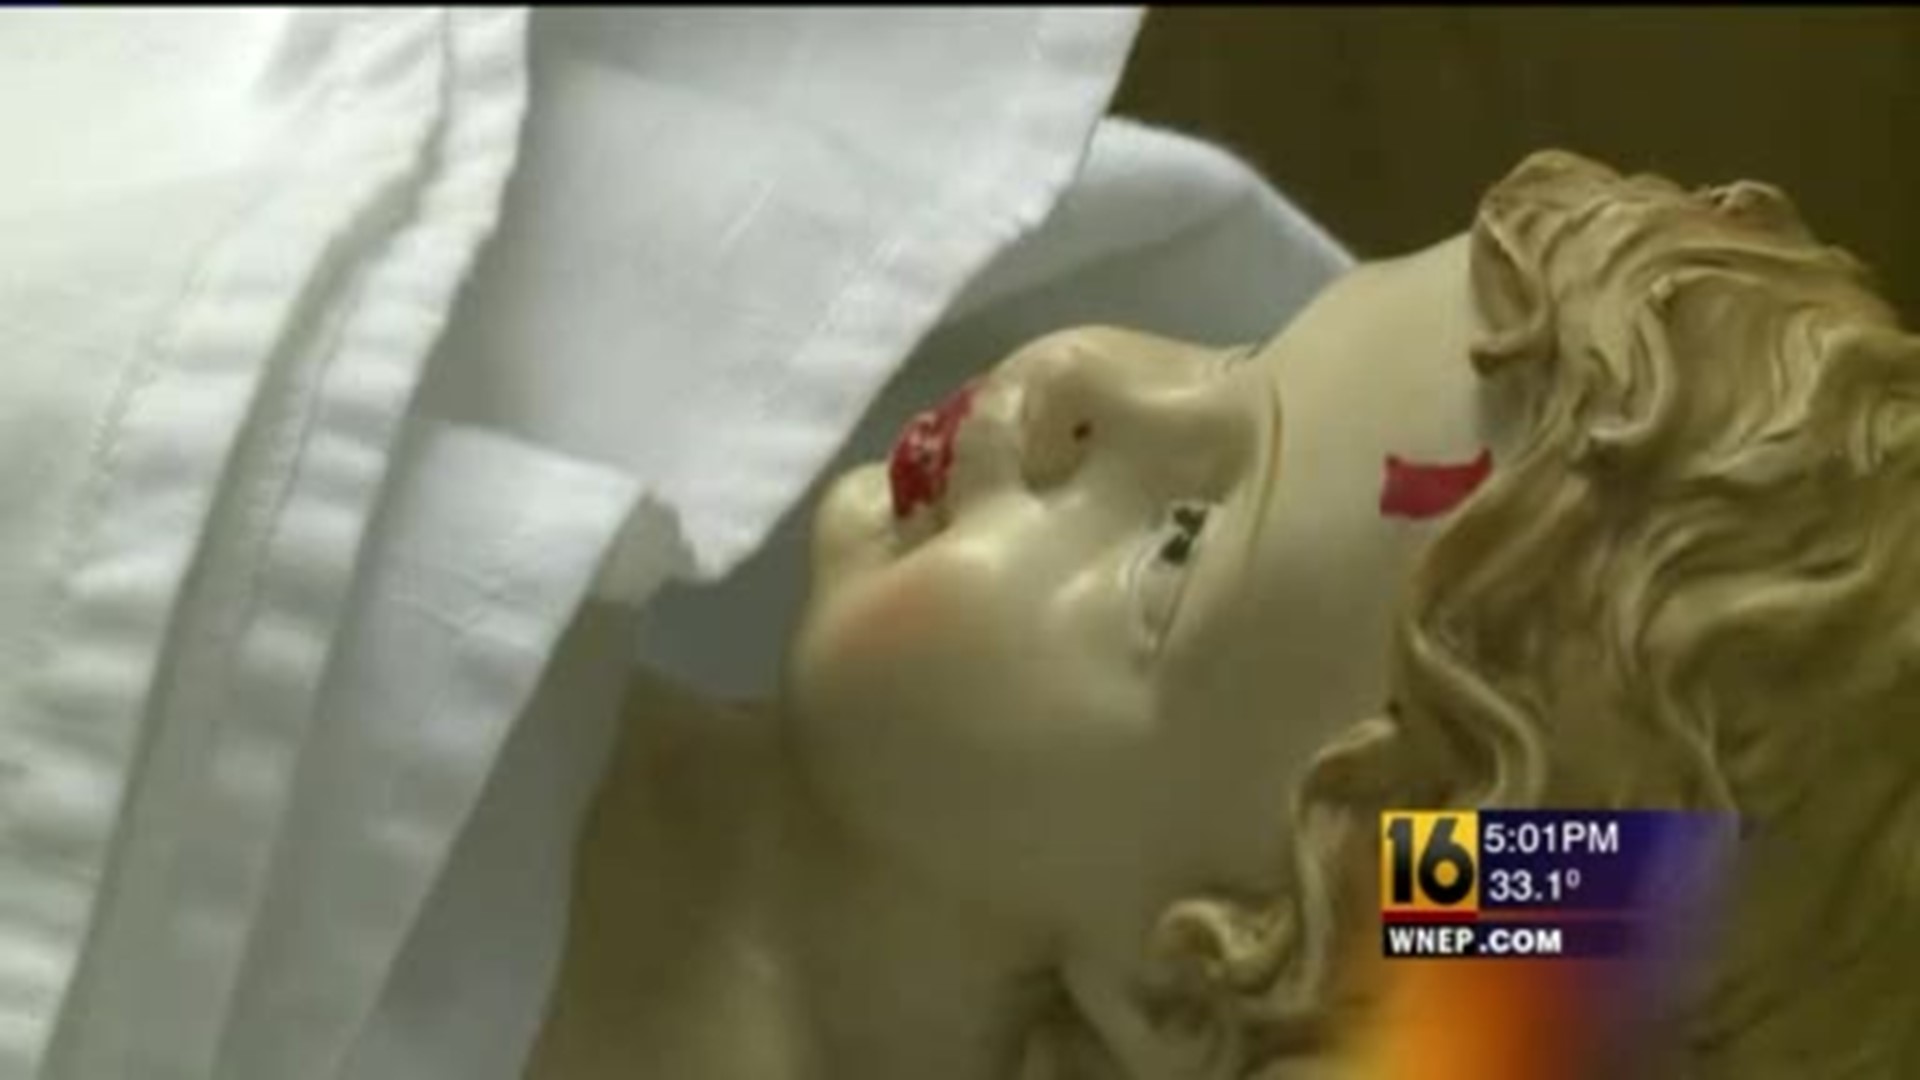 Baby Jesus Statue Defaced